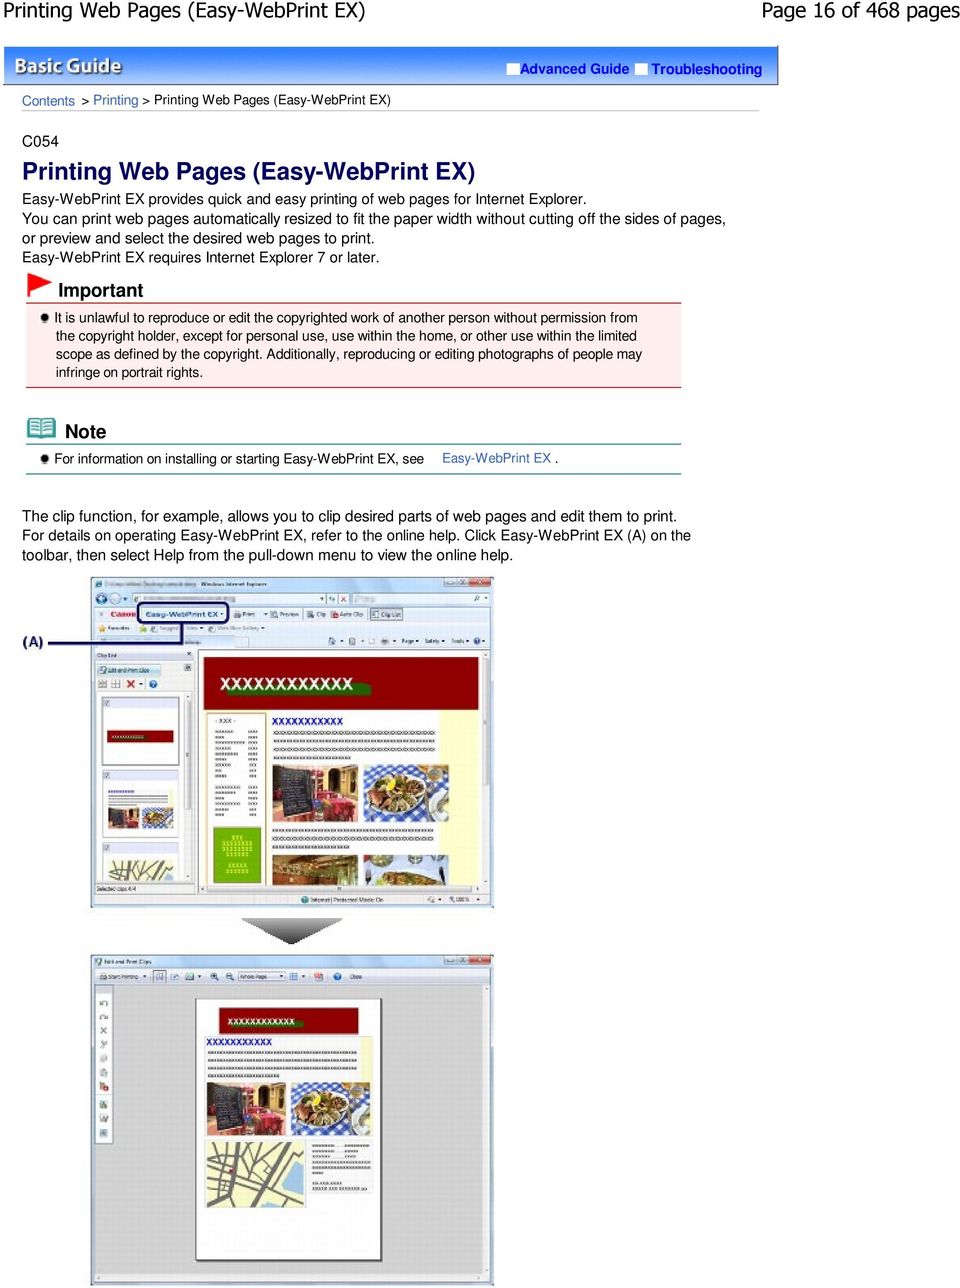 canon easy webprint ex download for internet explorer 11